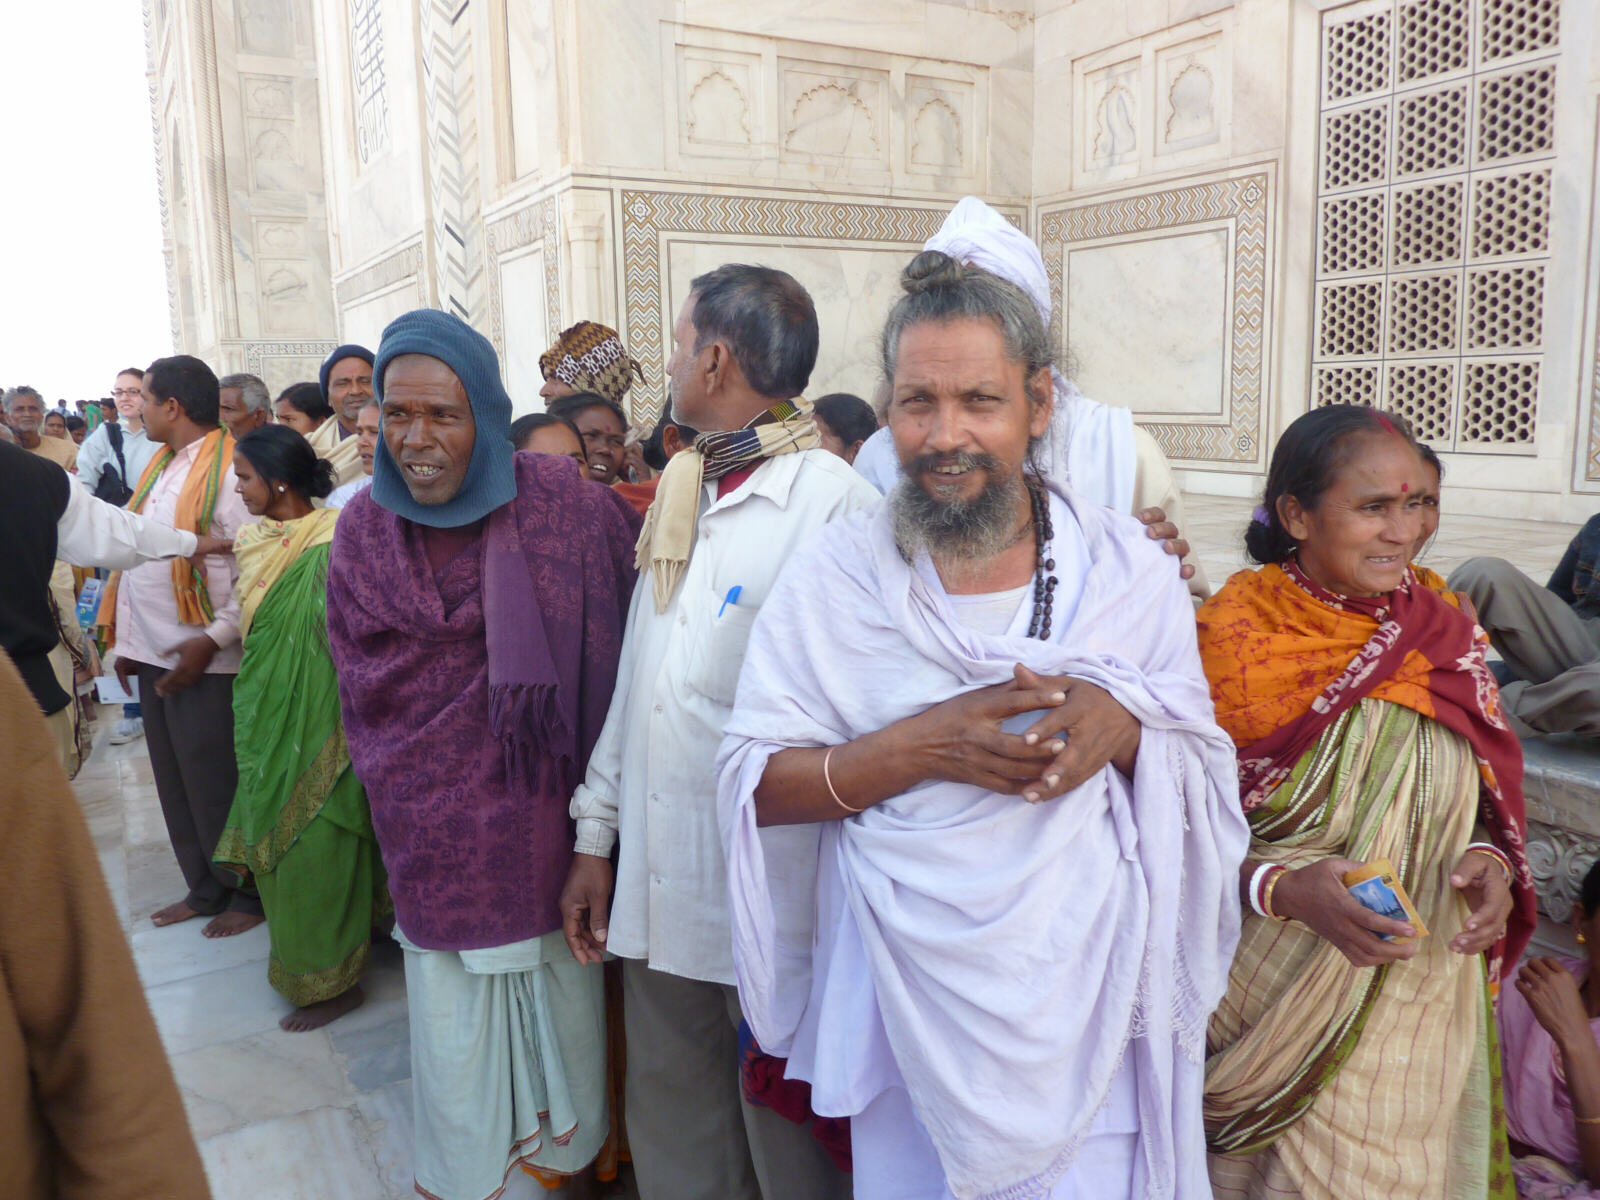 A queue of pilgrims at the Taj Mahal, Agra